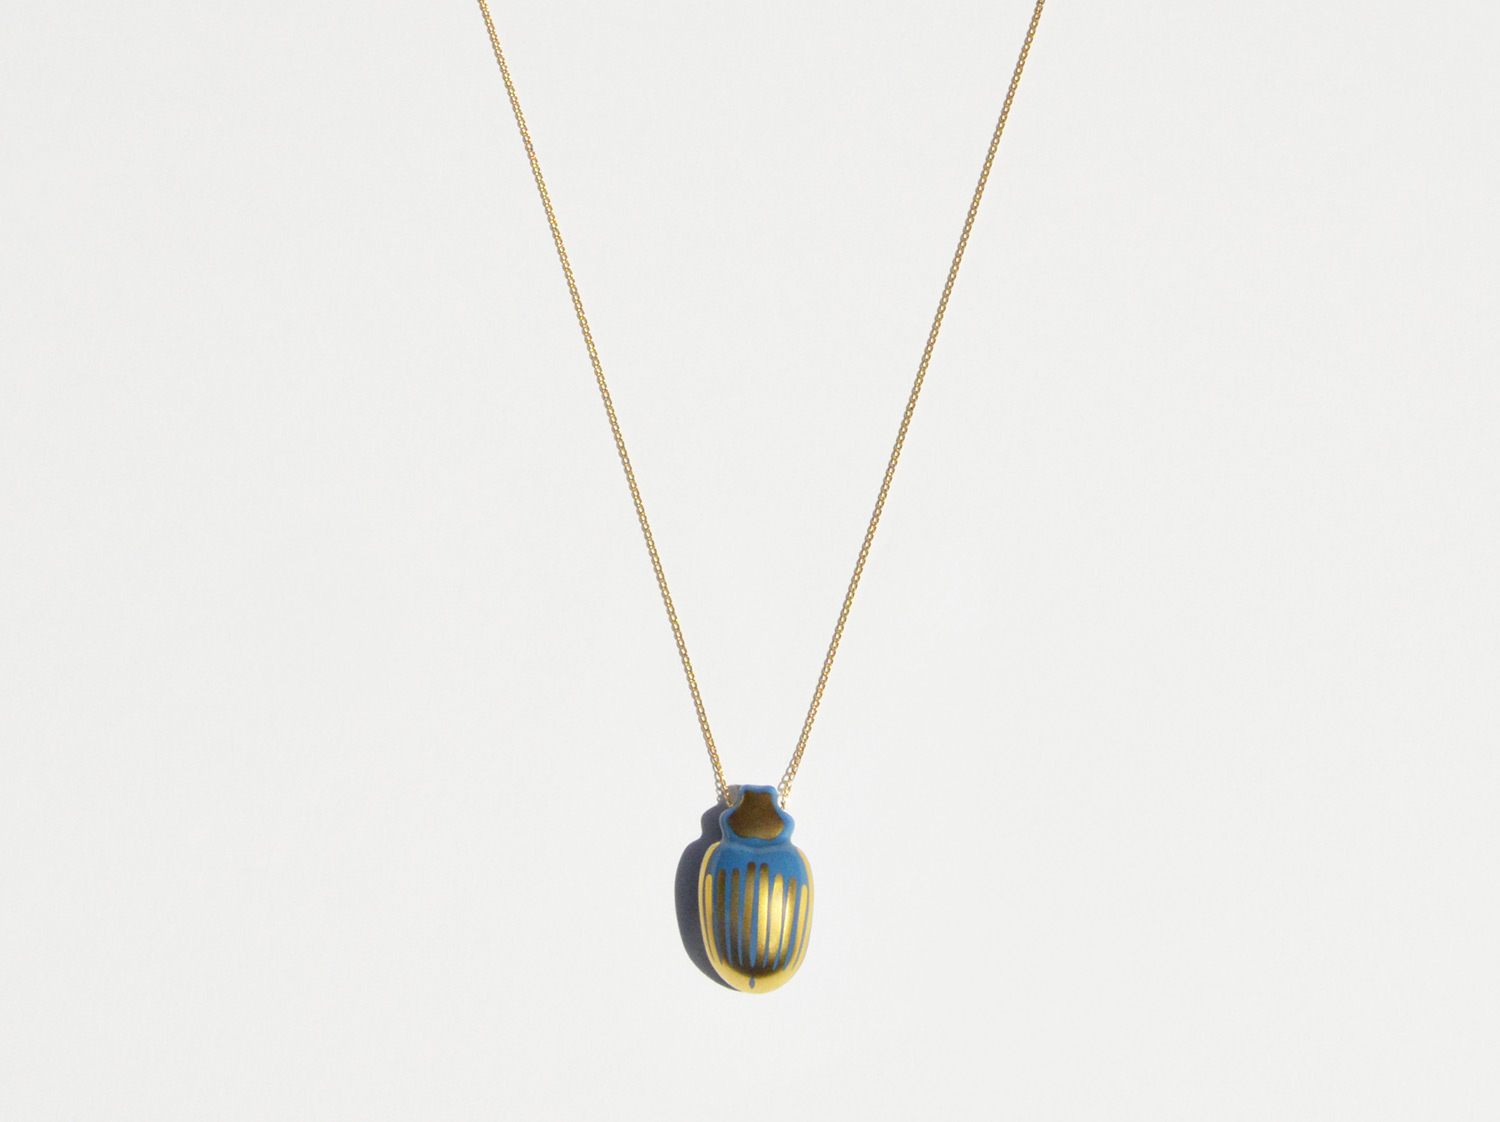 China Scarabée Pendant Blue & Gold of the collection SCARABEE BLEU OR | Bernardaud